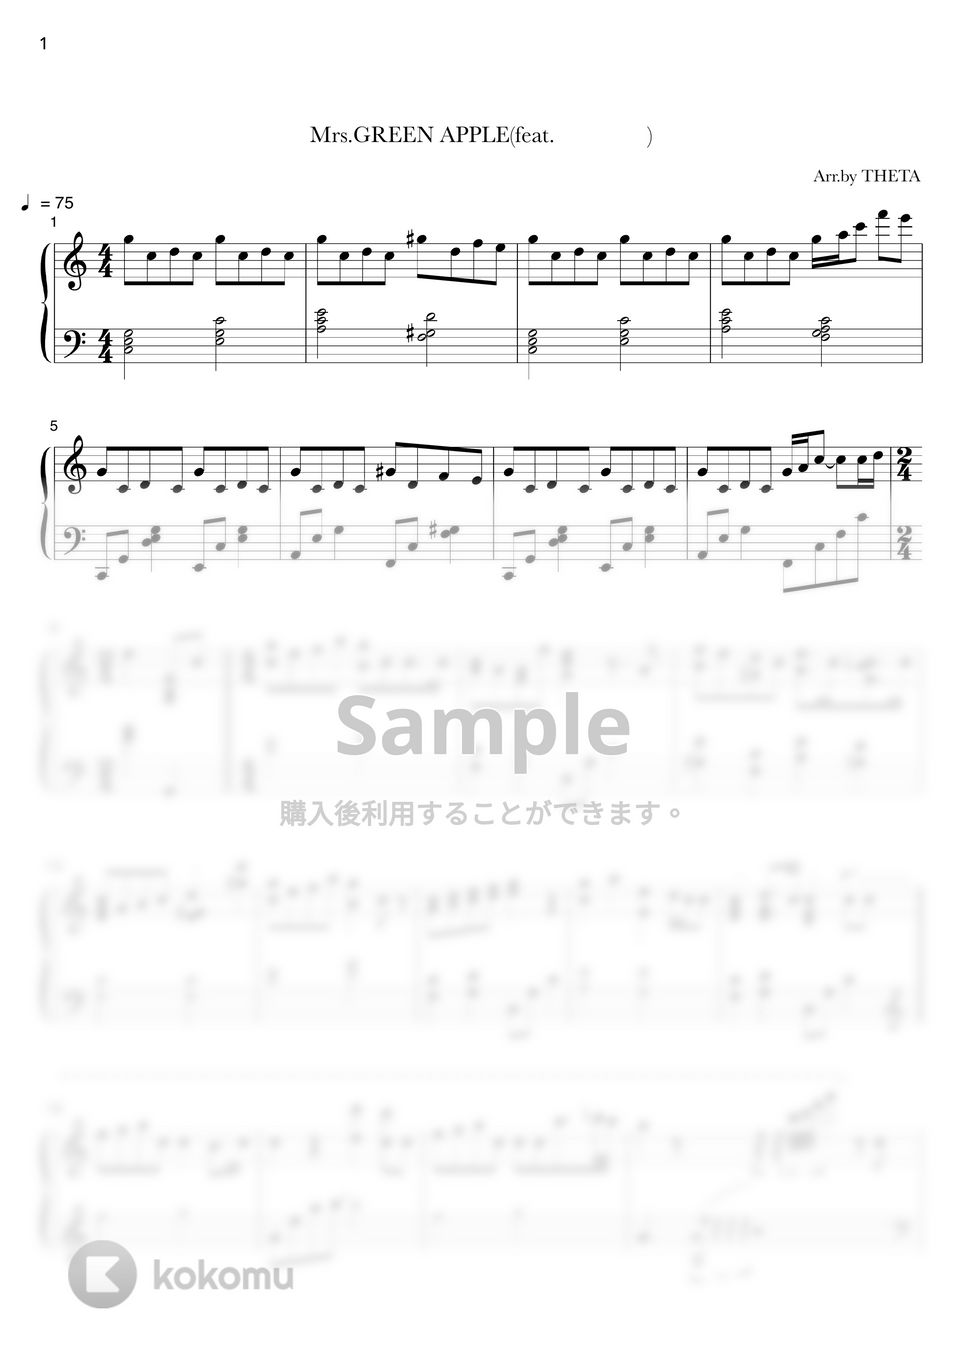 Mrs.GREENAPPLE (feat.井上苑子) - 点描の唄 by THETA